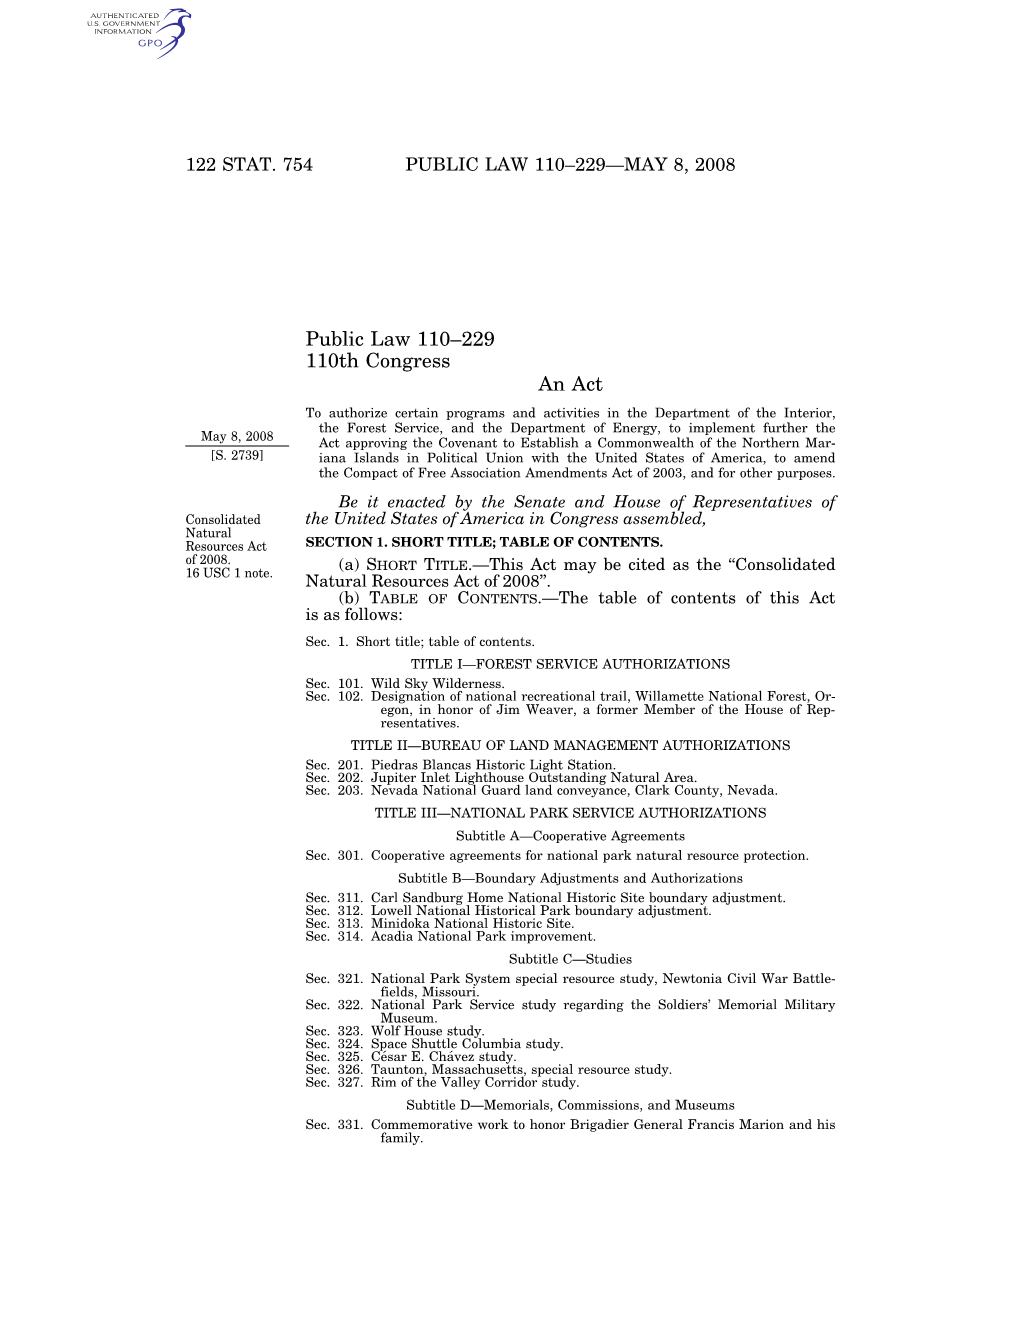 Public Law 110–229 110Th Congress An